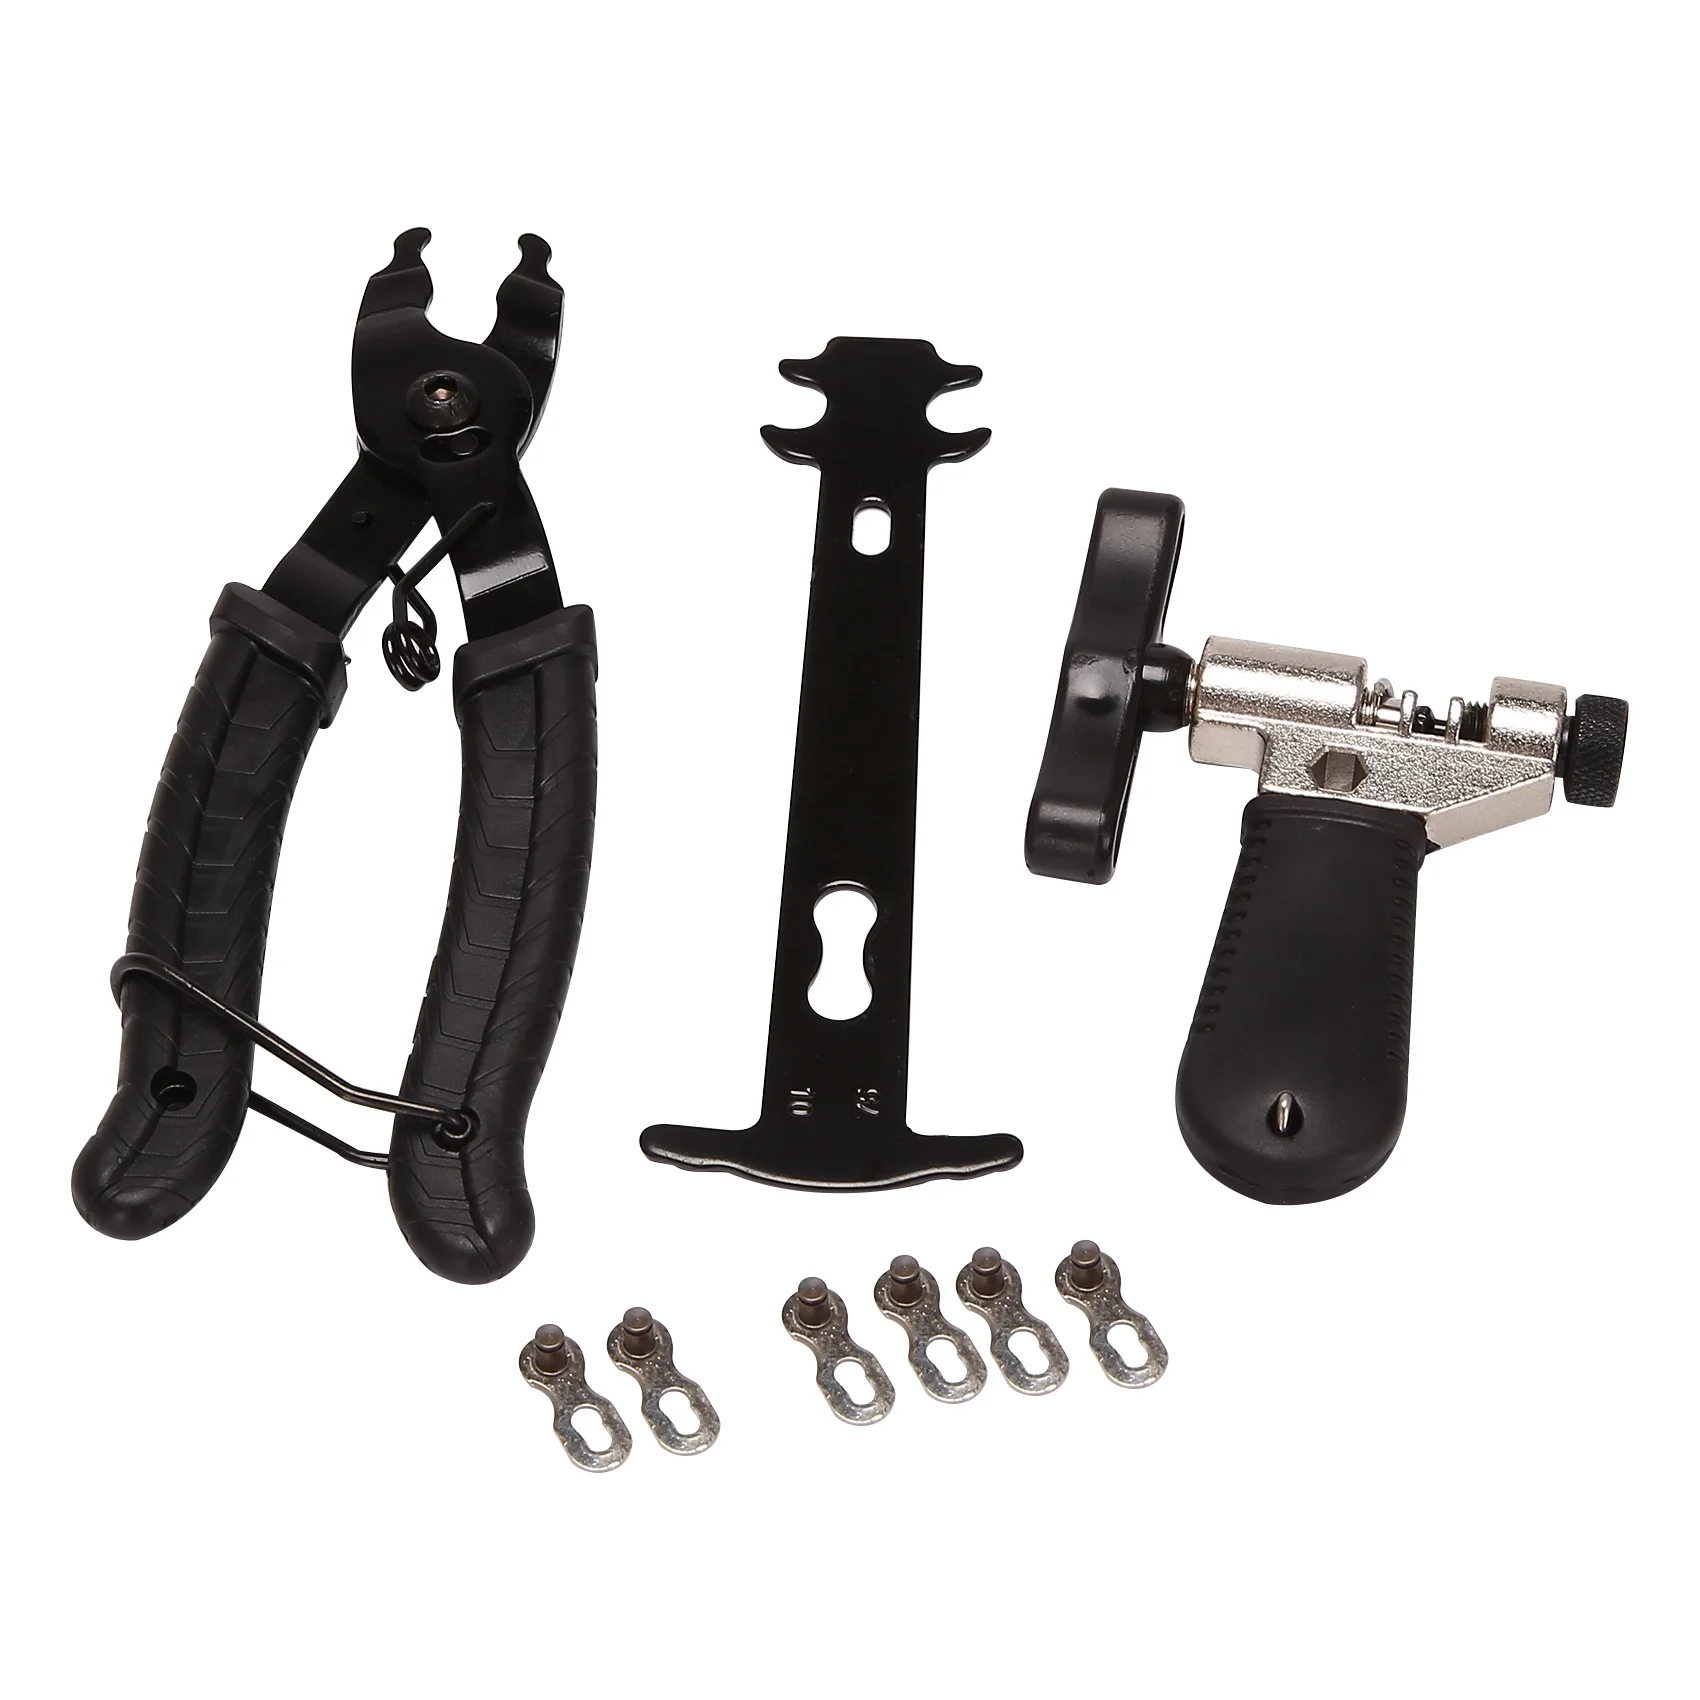 

Bike Chain Repair Tool Kit, Bike Master Link Pliers Remover Chain Breaker Splitter Cutter & Chain Wear Indicator Checker